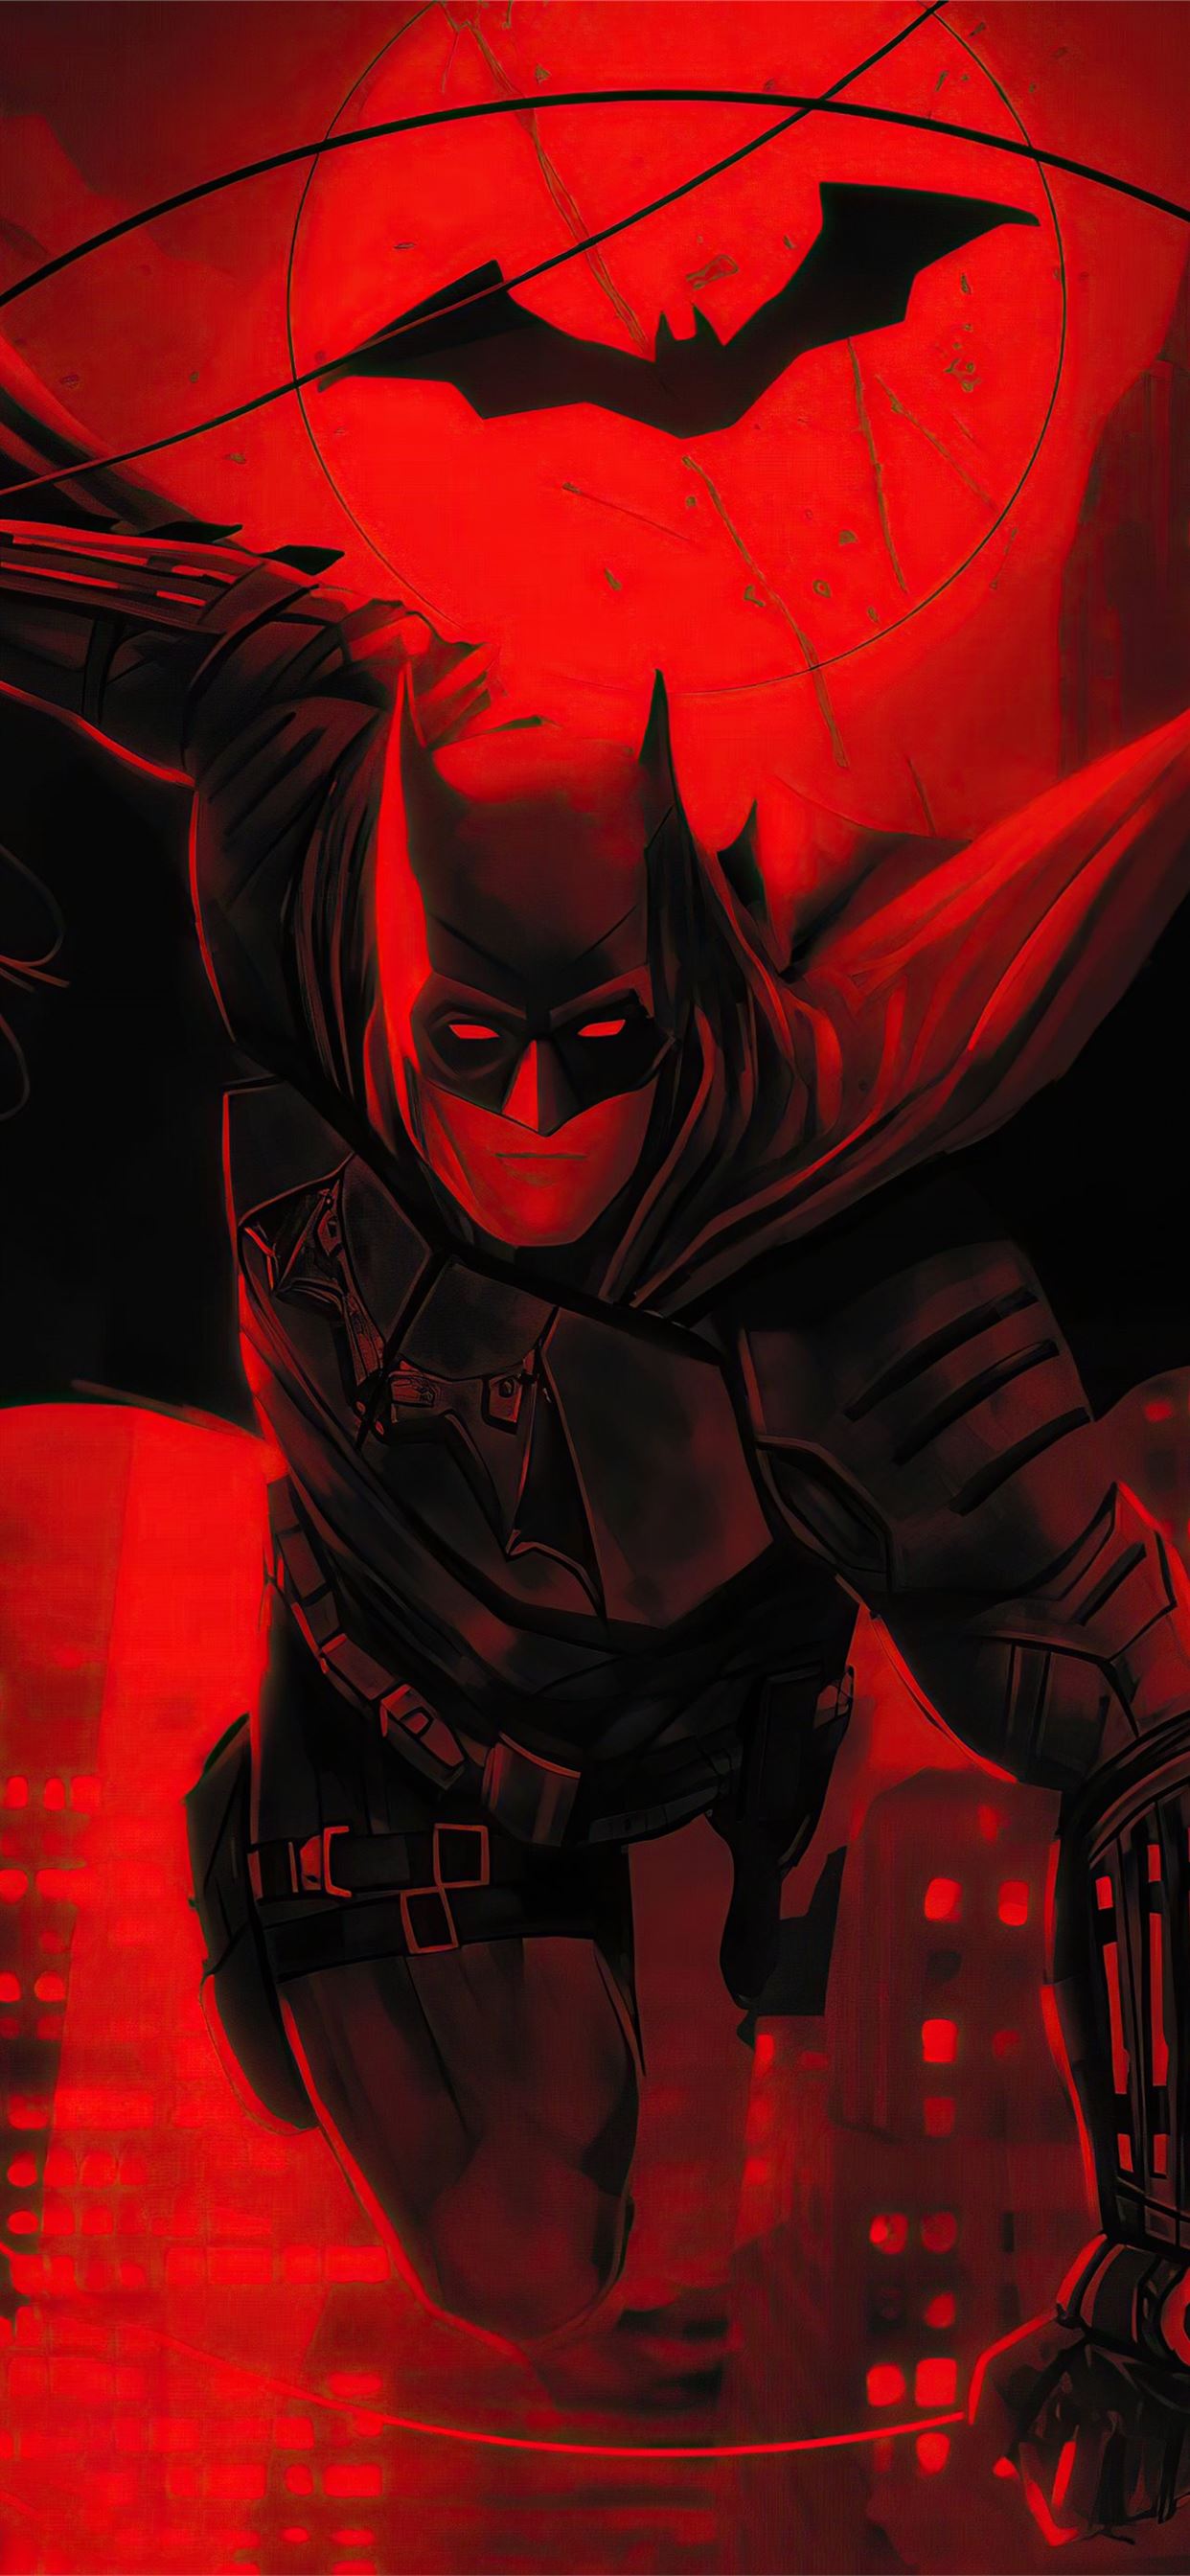 Wallpaper ID 76551  batman hd 4k superheroes artwork digital art  behance free download